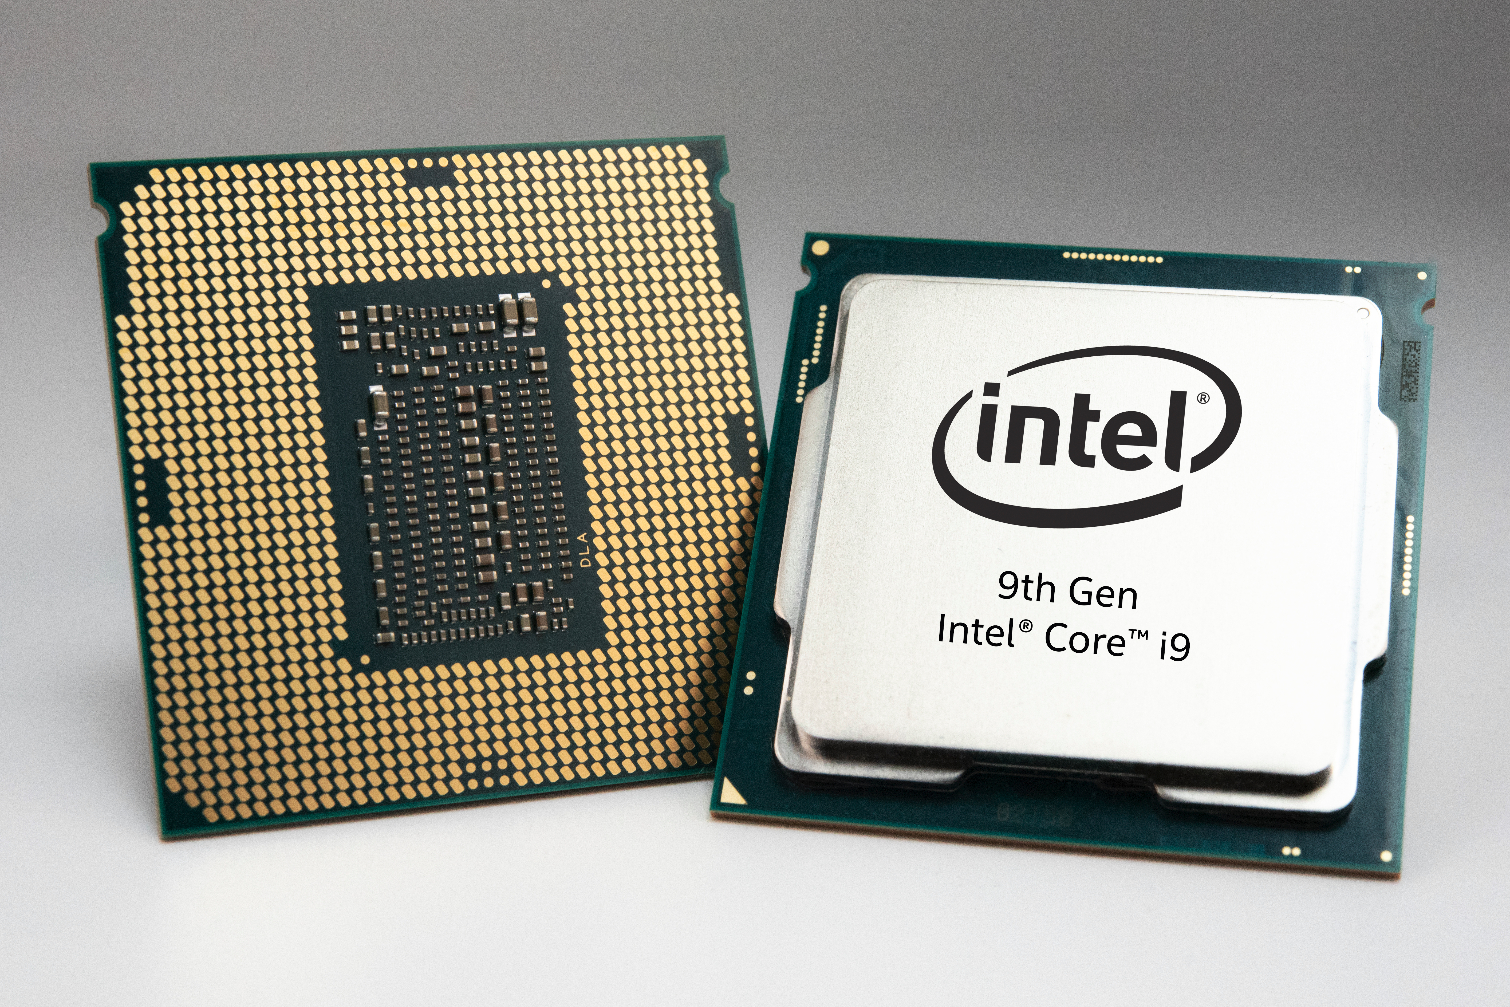 BES Alice Beschuldigingen Intel Core i7-9700K 9th Gen CPU Review: Eight Cores And No Hyper-Threading  - Tom's Hardware | Tom's Hardware